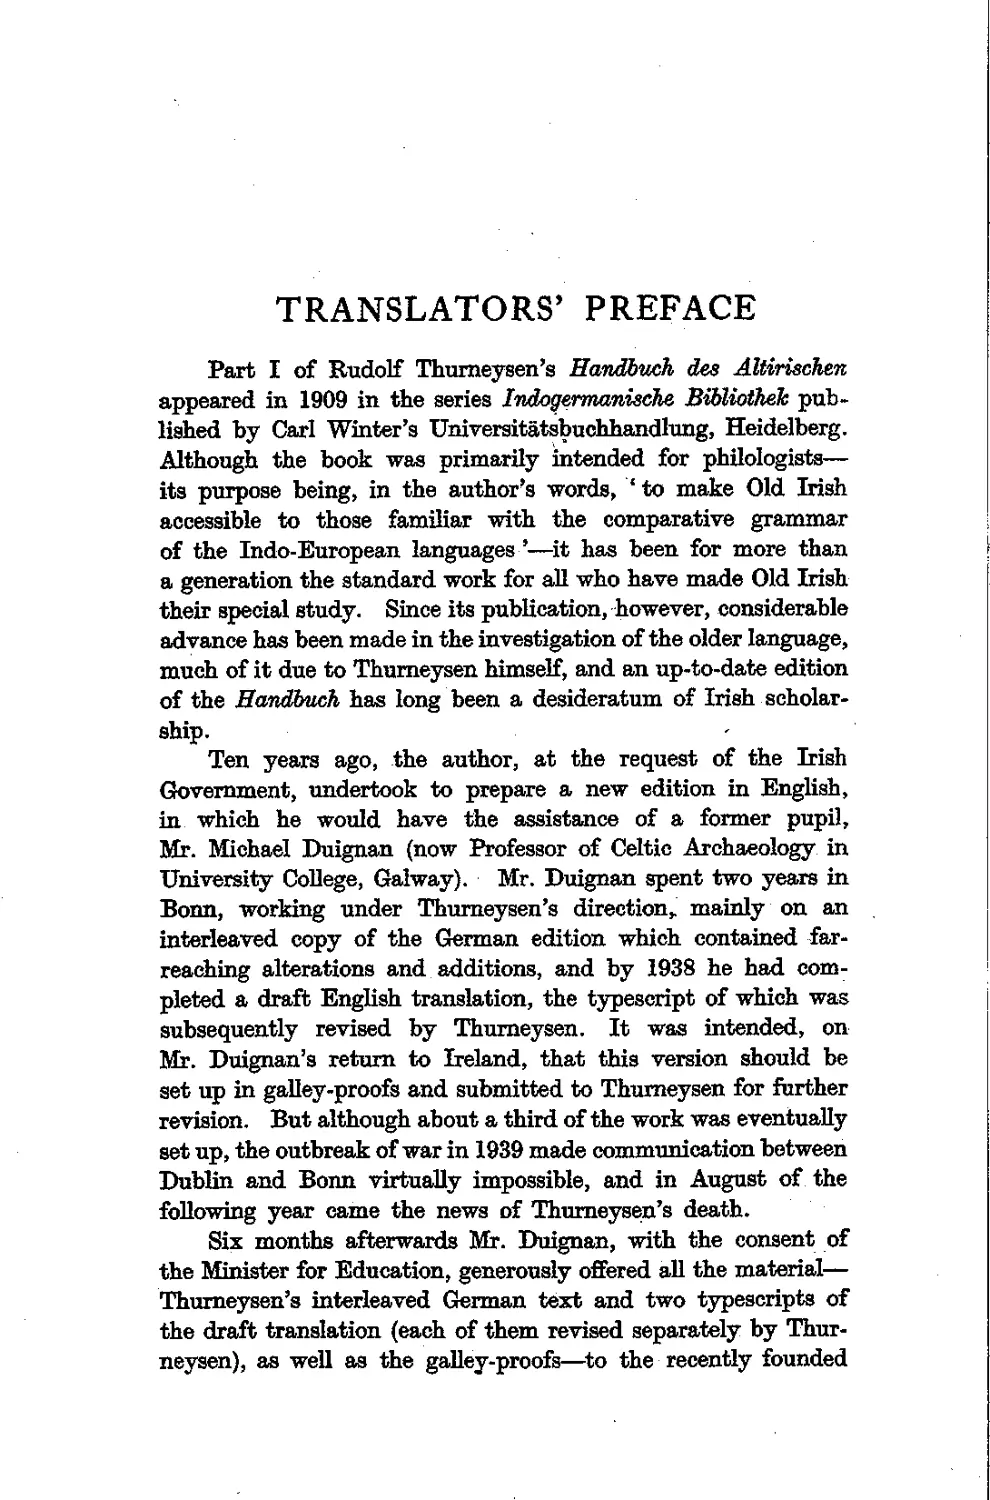 Translators' preface